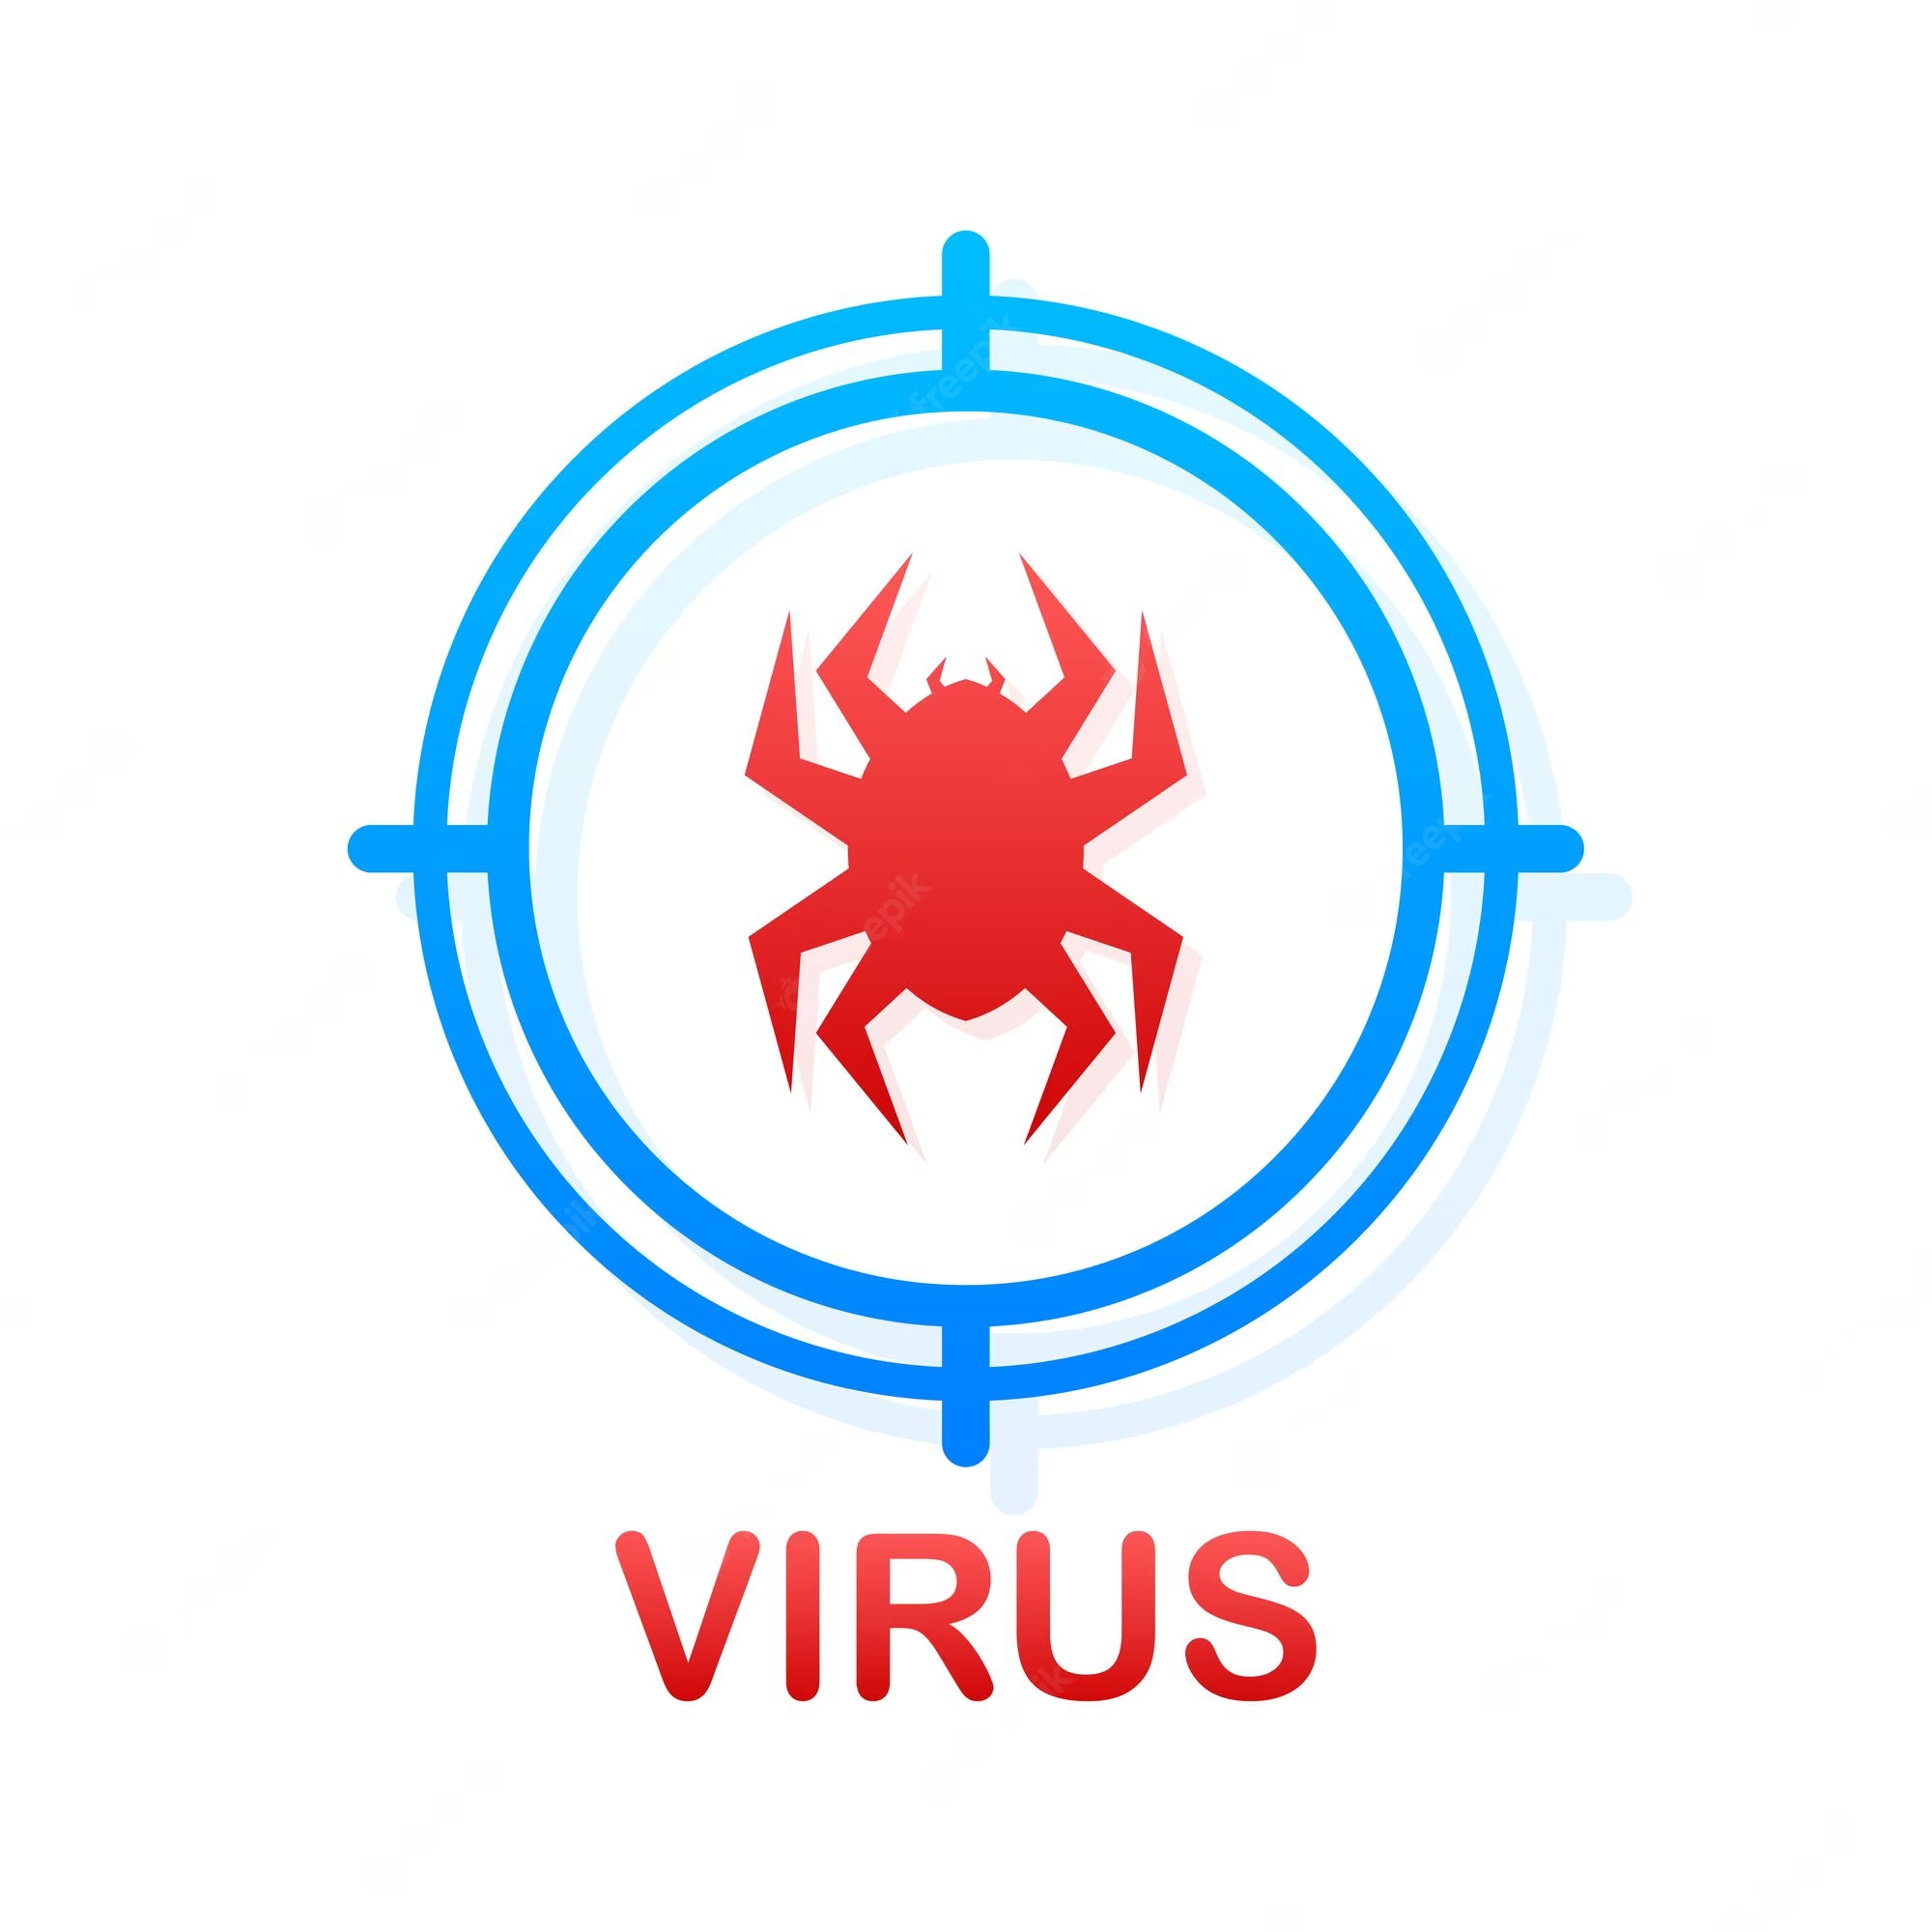 virus-informatico-estilo-plano-simbolo-proteccion-tecnologia-internet-proteccion-datos_100456-6160.png